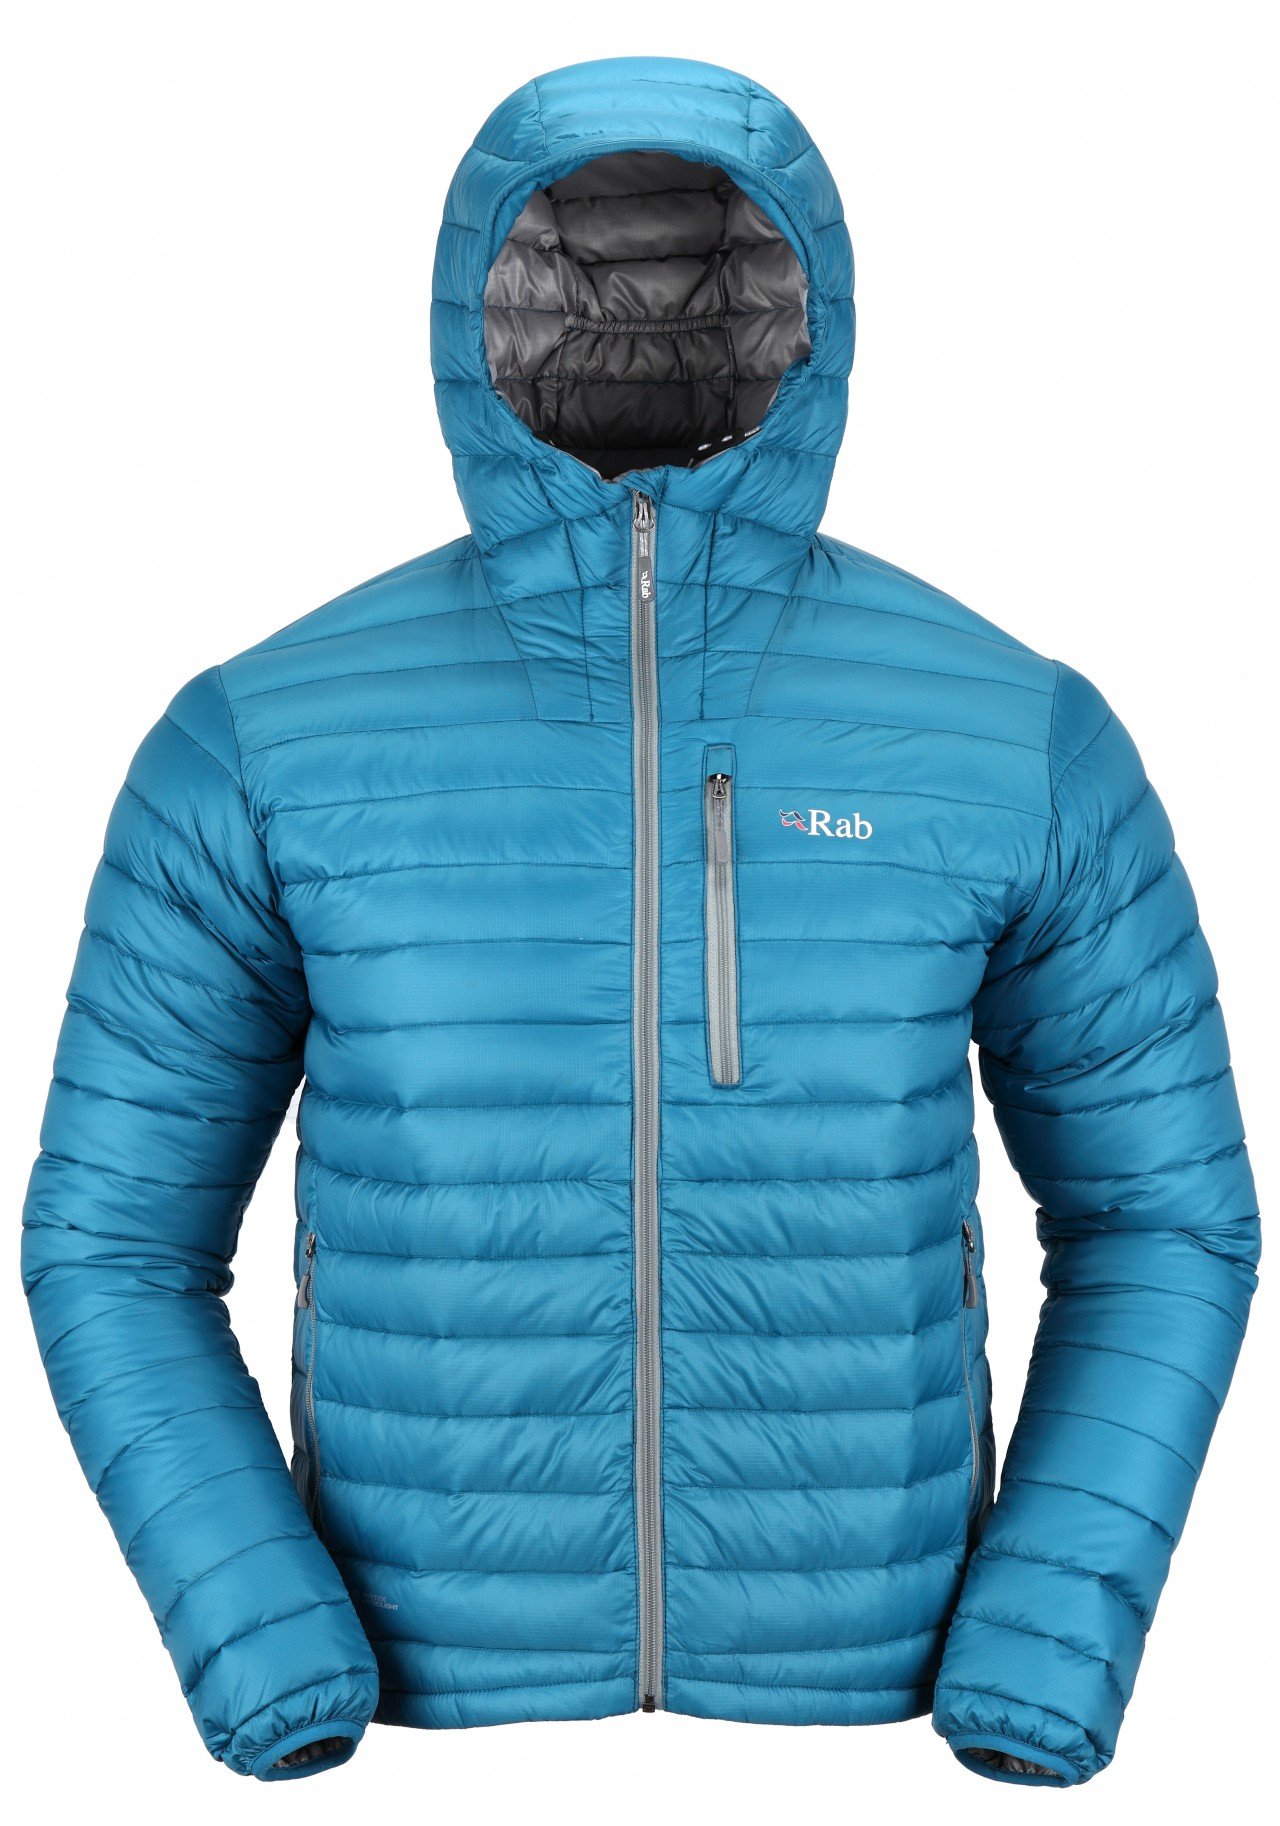 Rab Alpine Jacket in BlueGrey.jpg